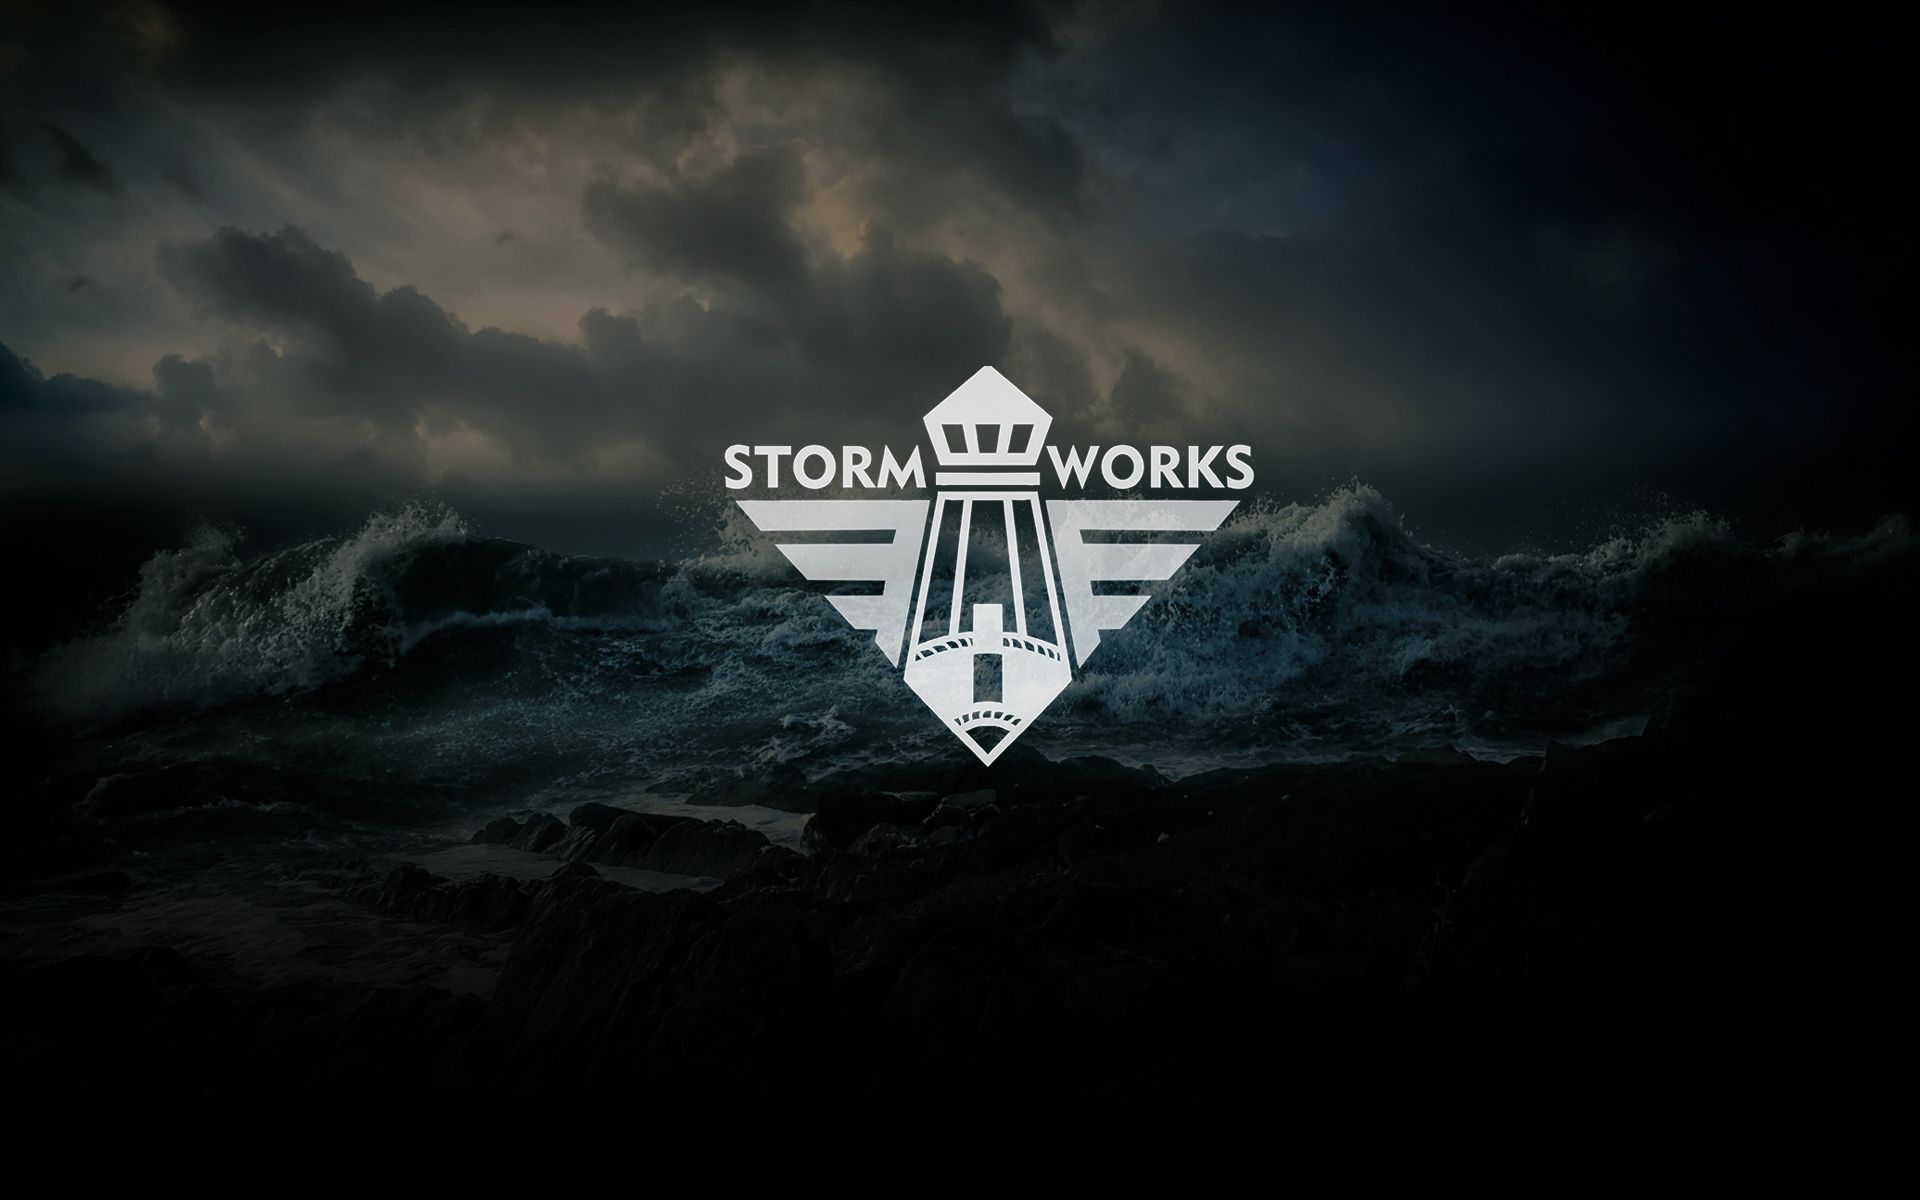 Storm works